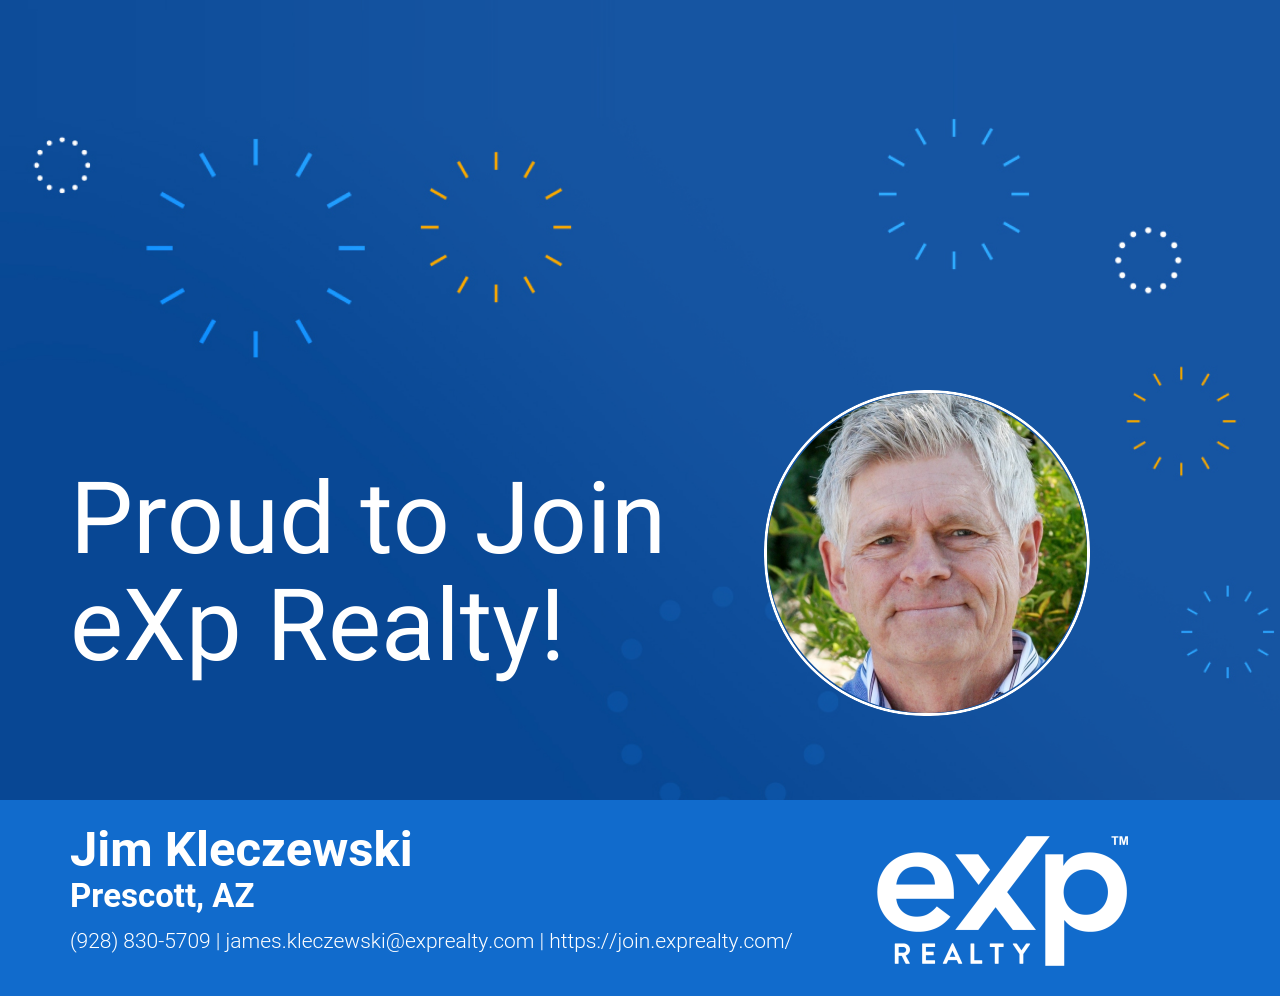 Jim Kleczewski Joined eXp Realty!